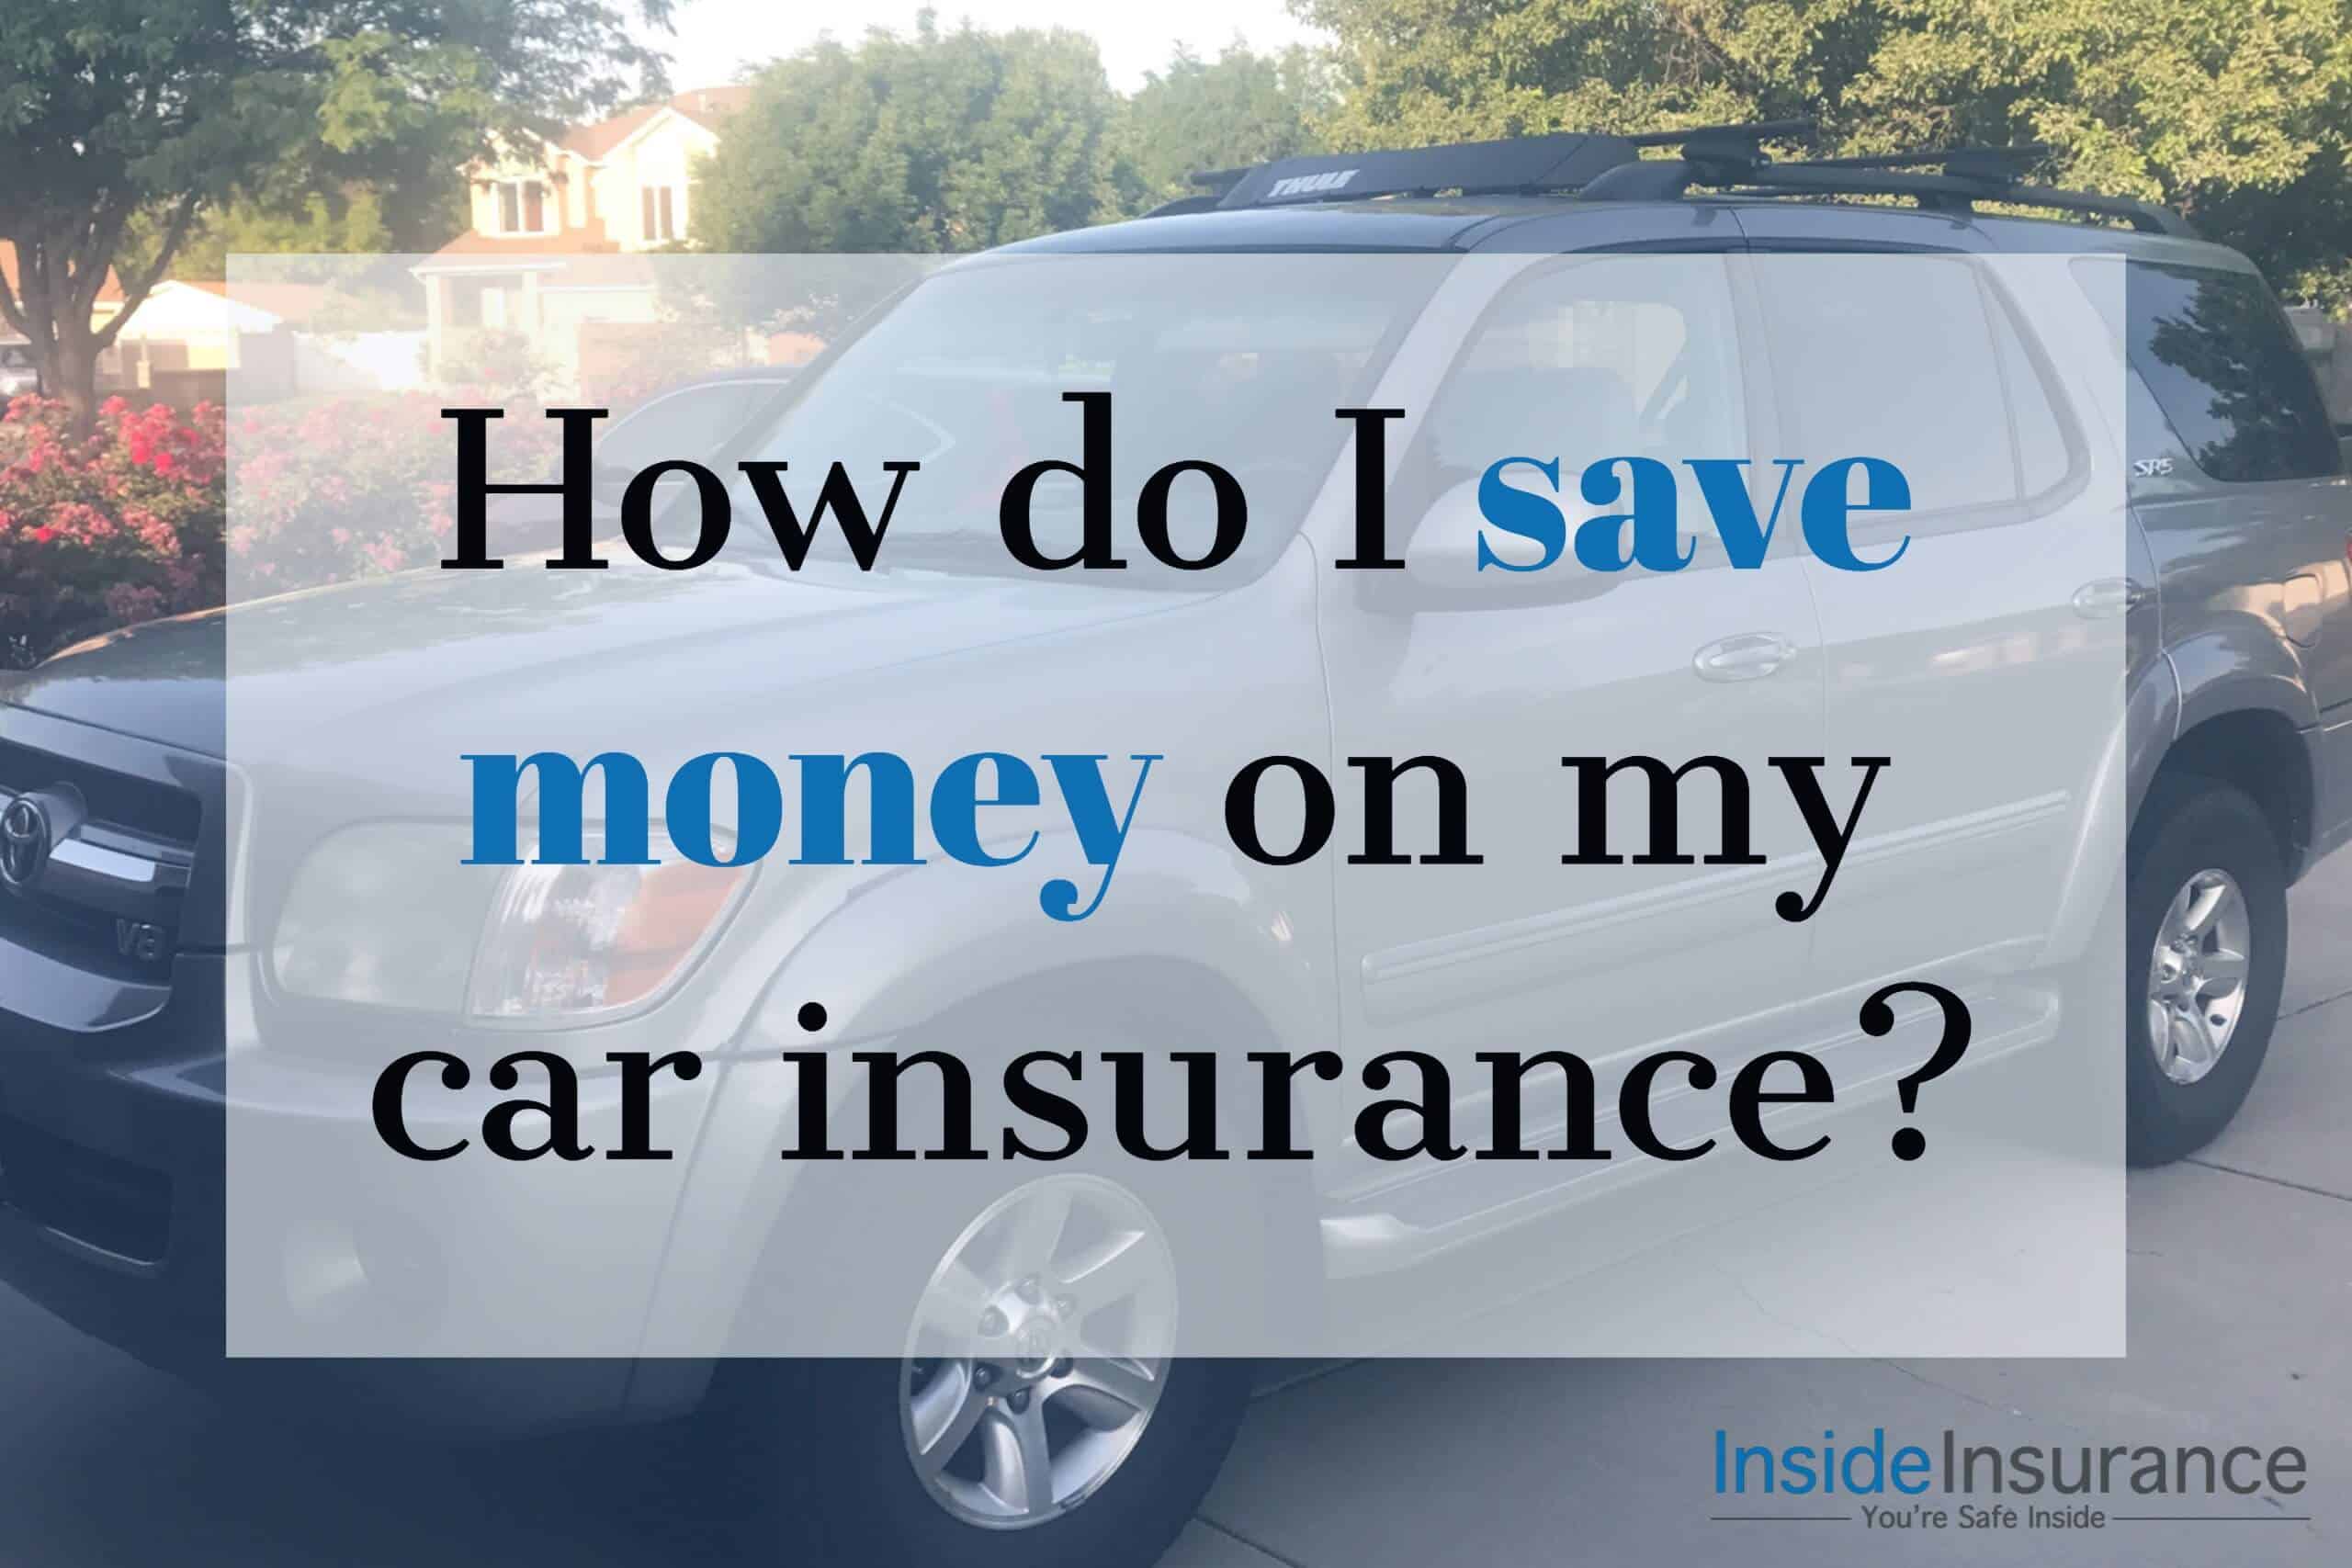 How do I save money on my car insurance?